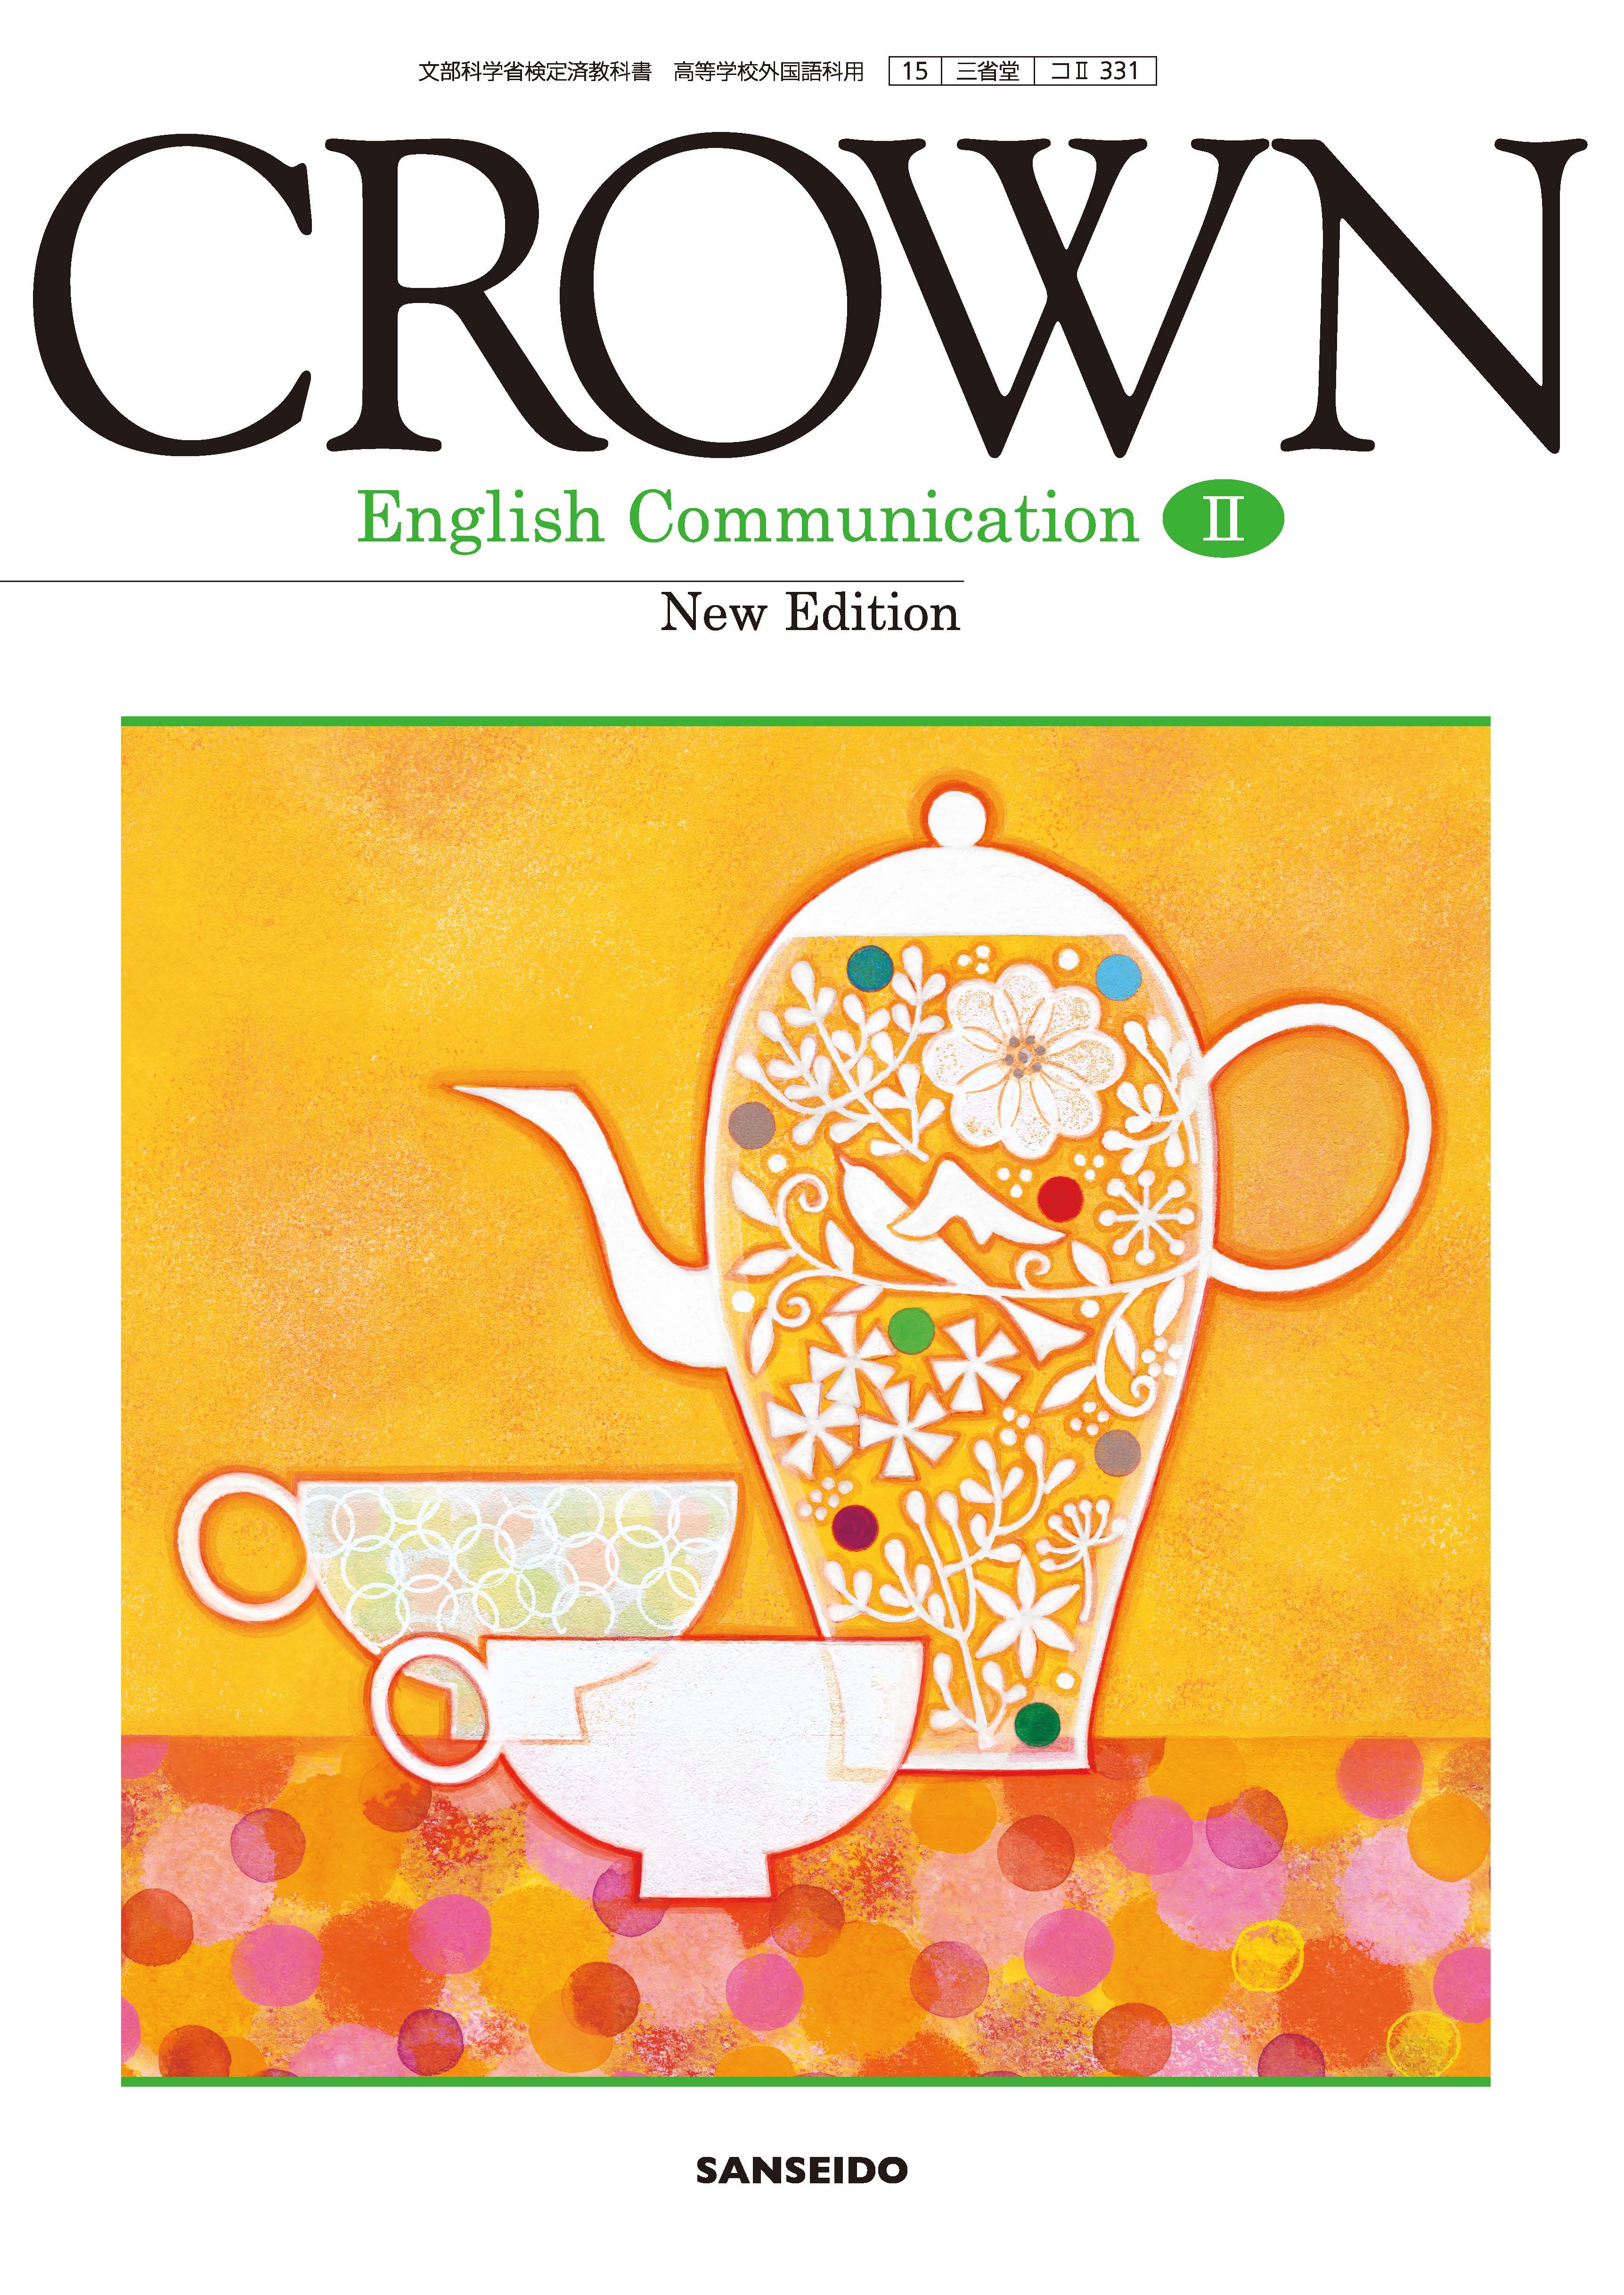 CROWN English Communication Ⅱ New Edition コⅡ 331